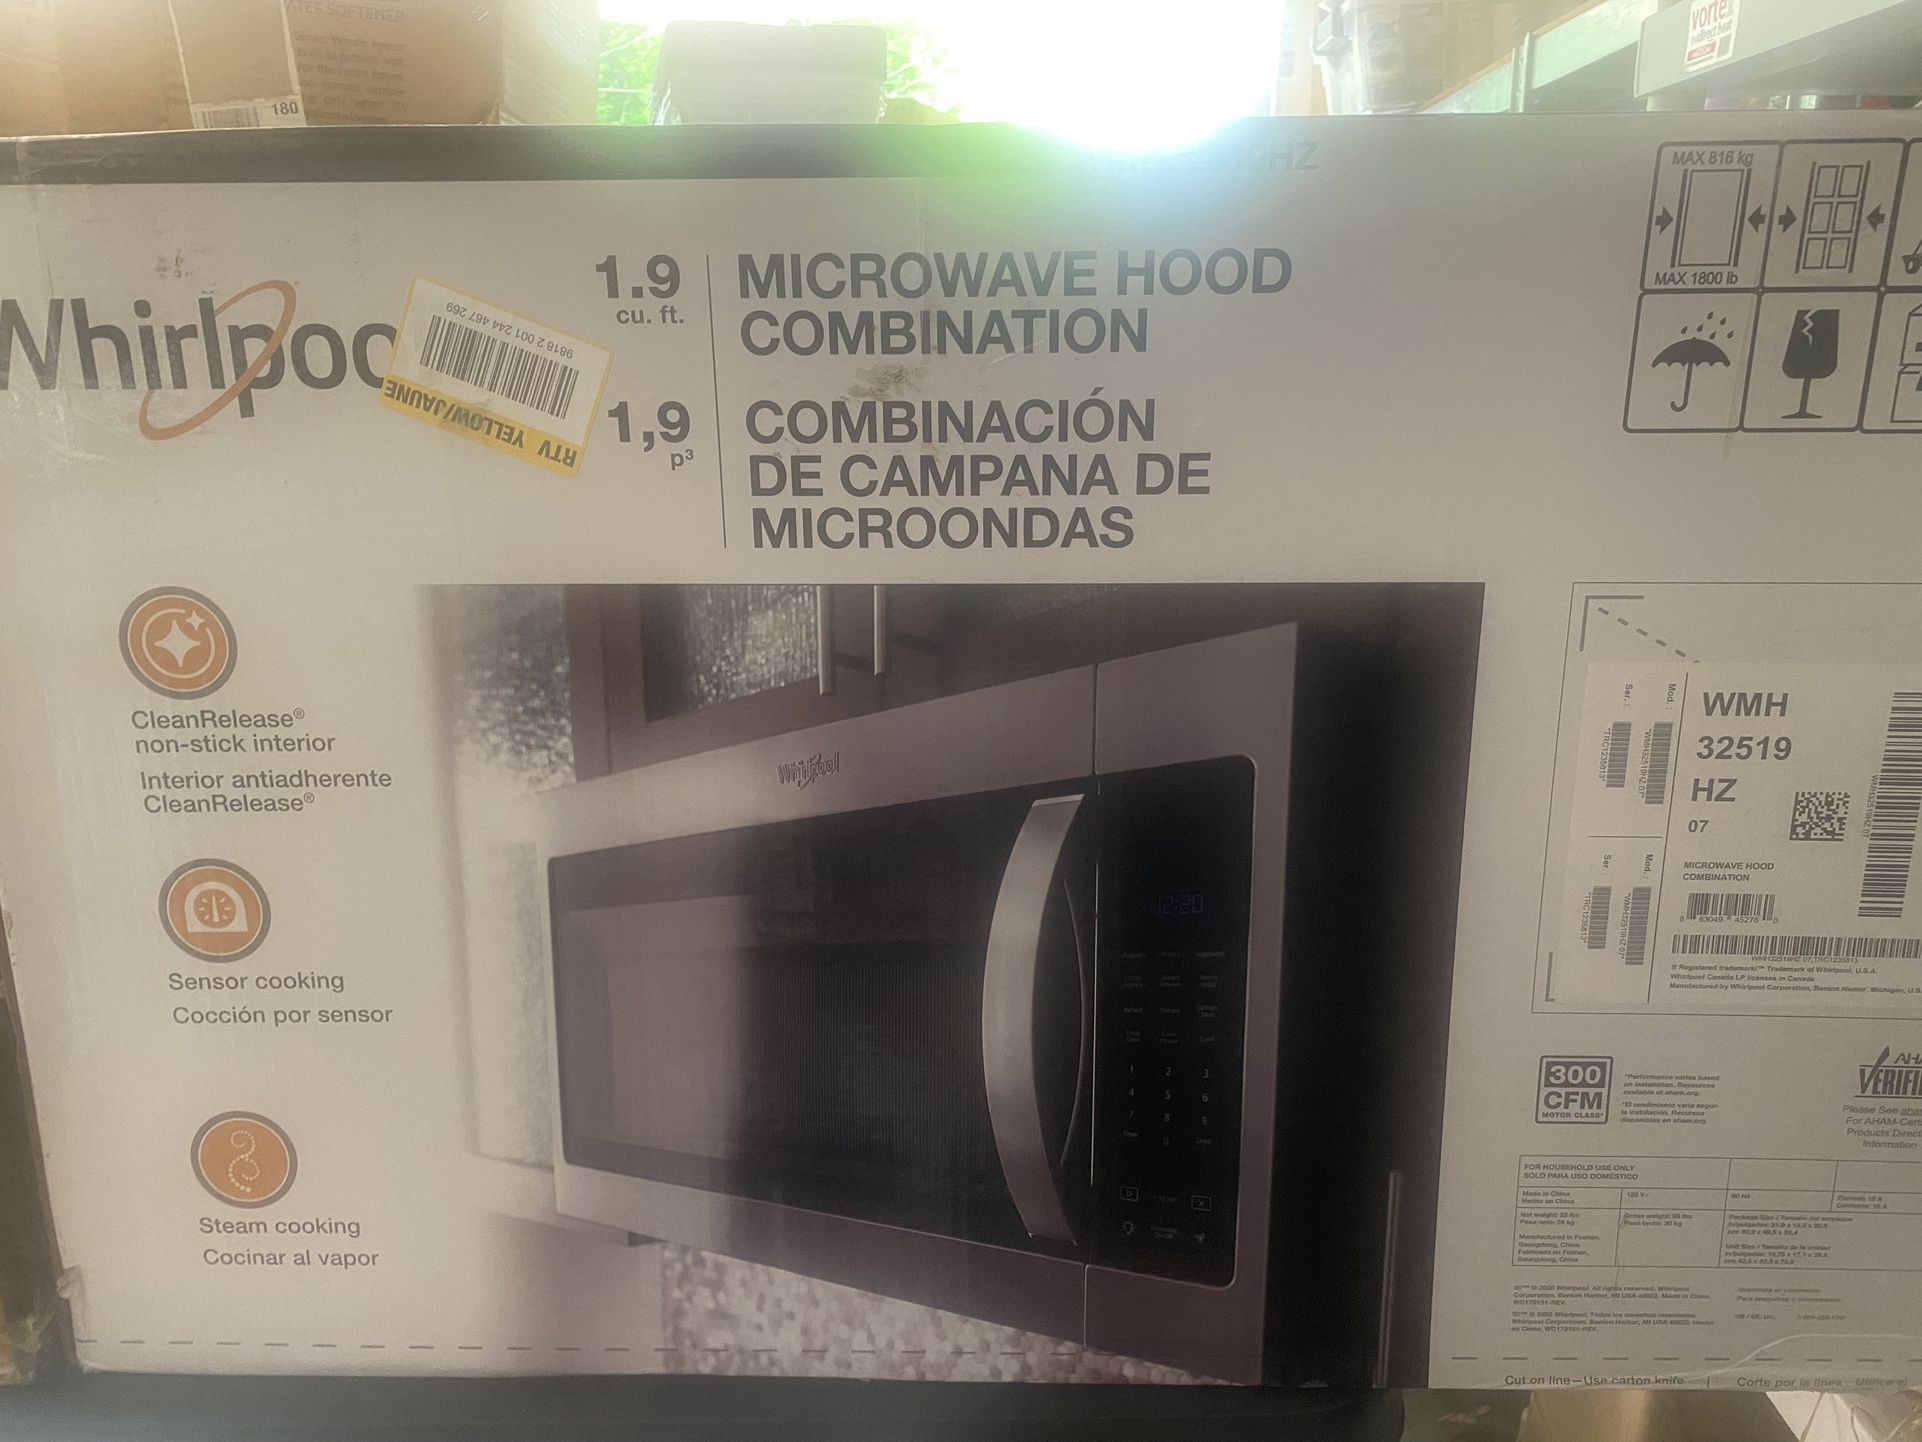 Whirlpool Microwave 